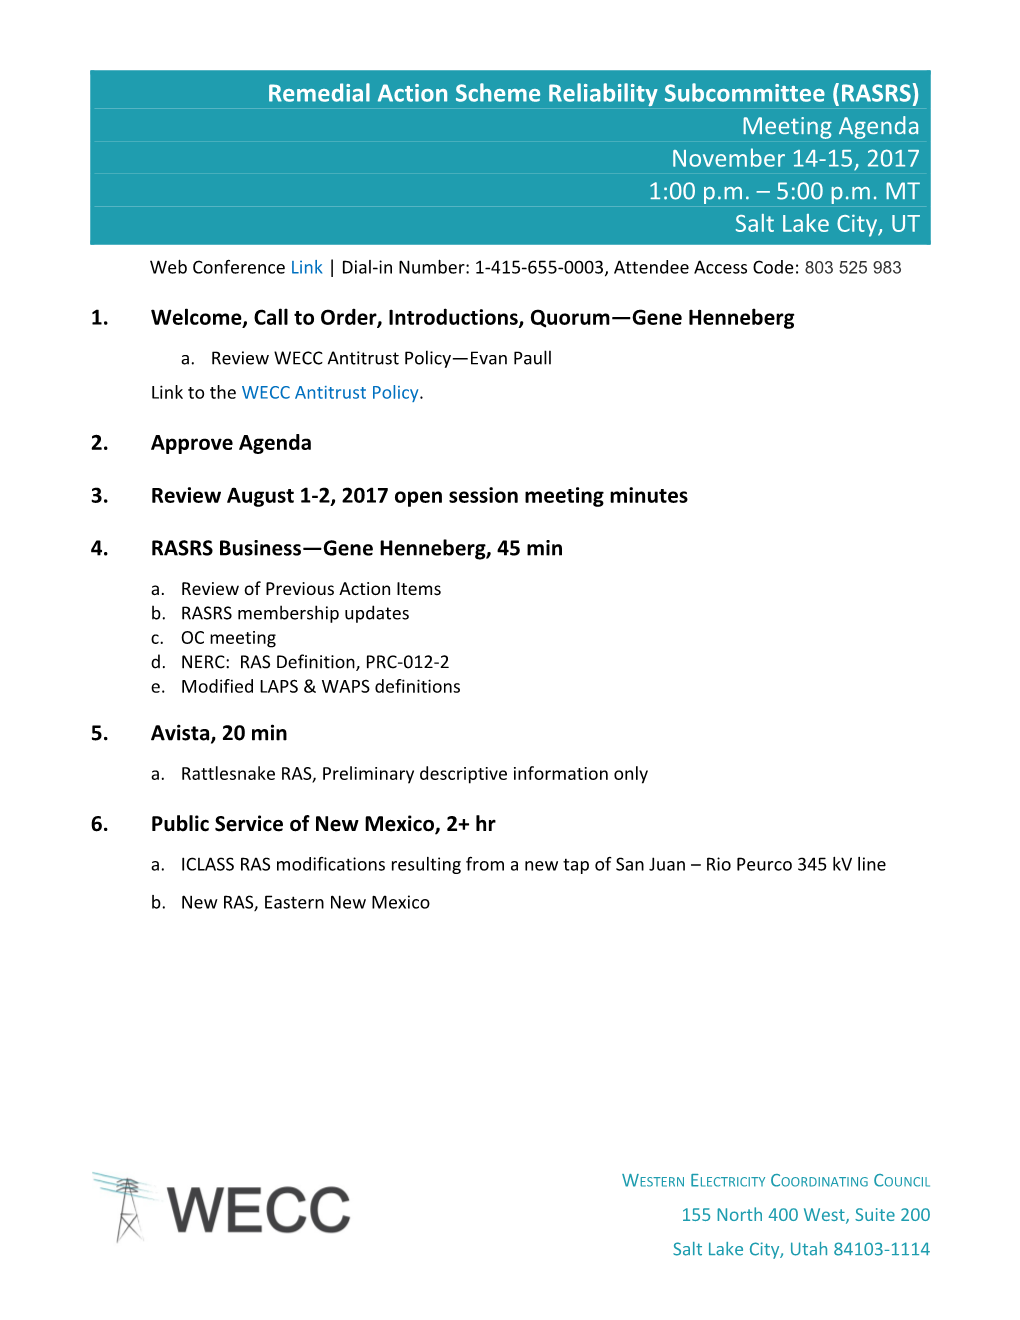 RASRS Meeting Agenda November 14-16, 20171